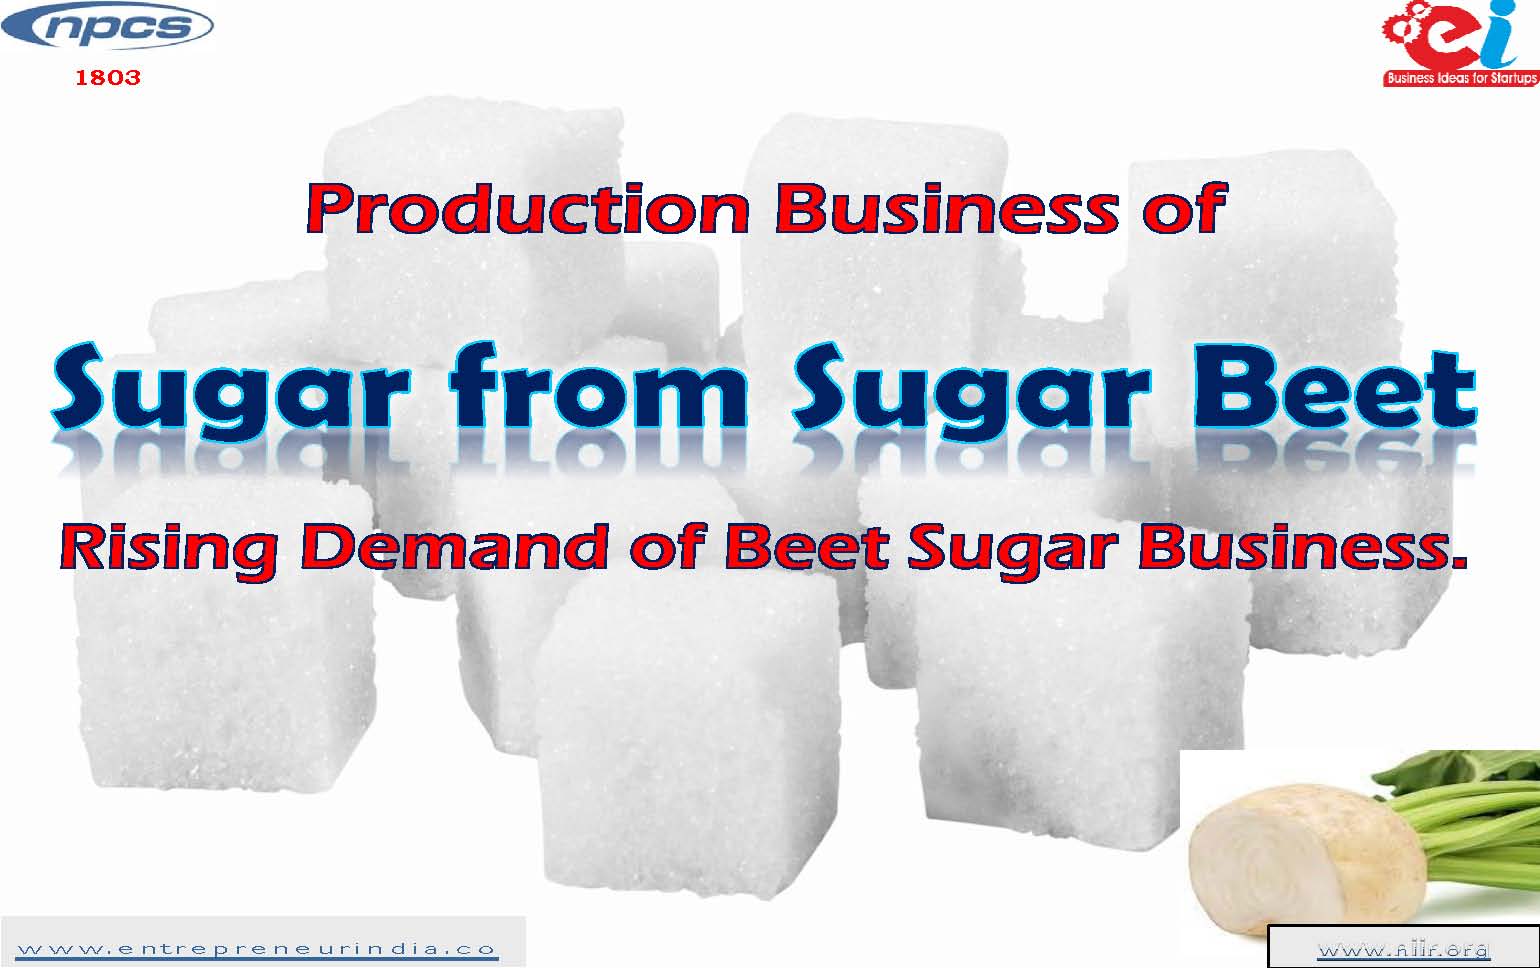 Production Business of Sugar from Sugar Beet Rising Demand of Beet Sugar Business